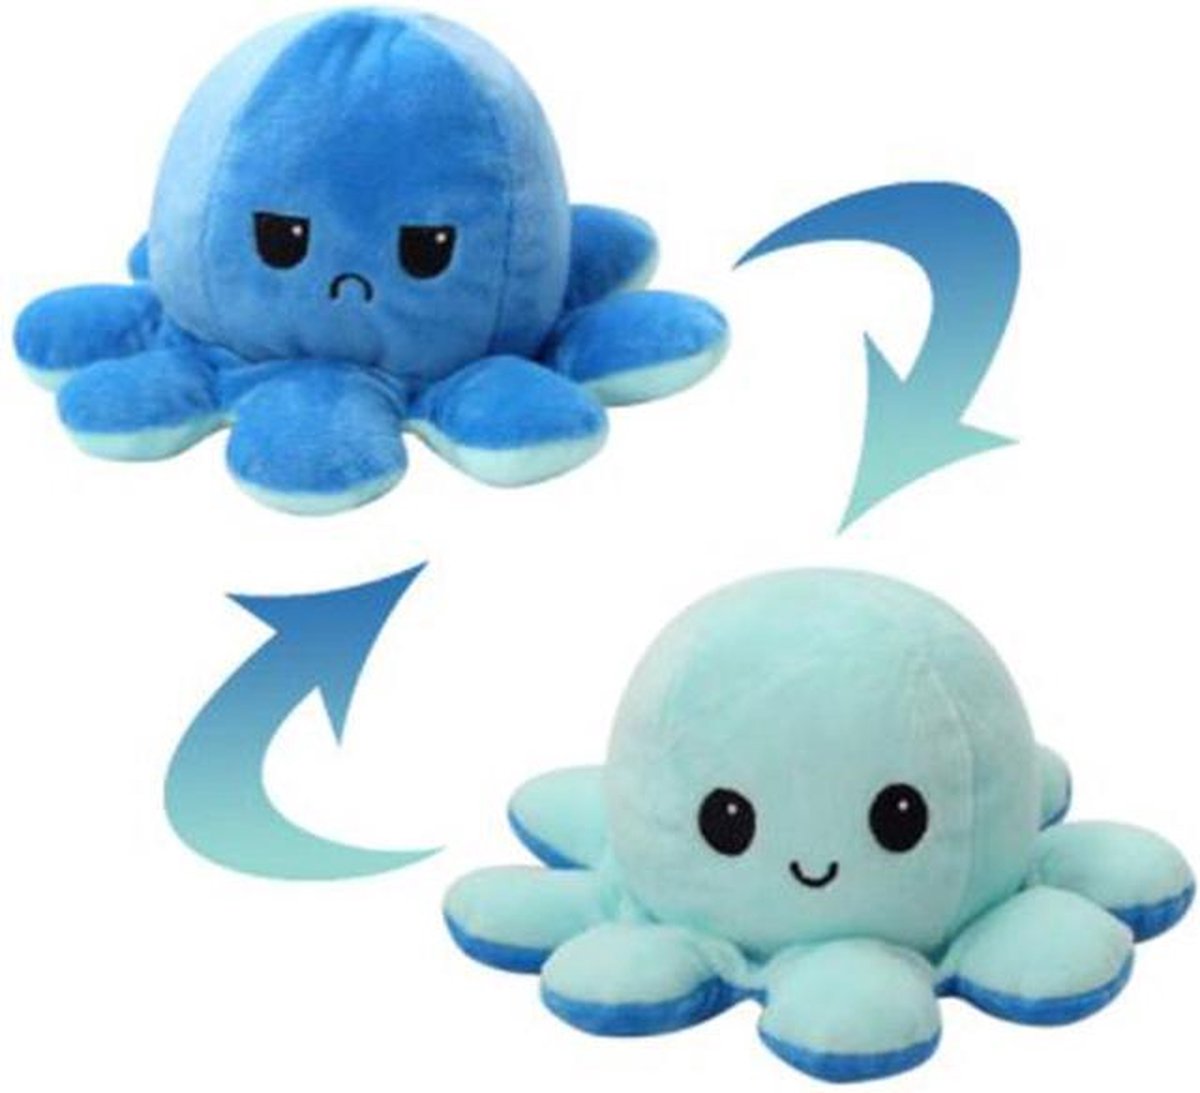 Mood Octopus Knuffel - Reversible / Dubbelzijdig - As seen on TikTok -15 cm Blauw/donkerblauw) - Merkloos